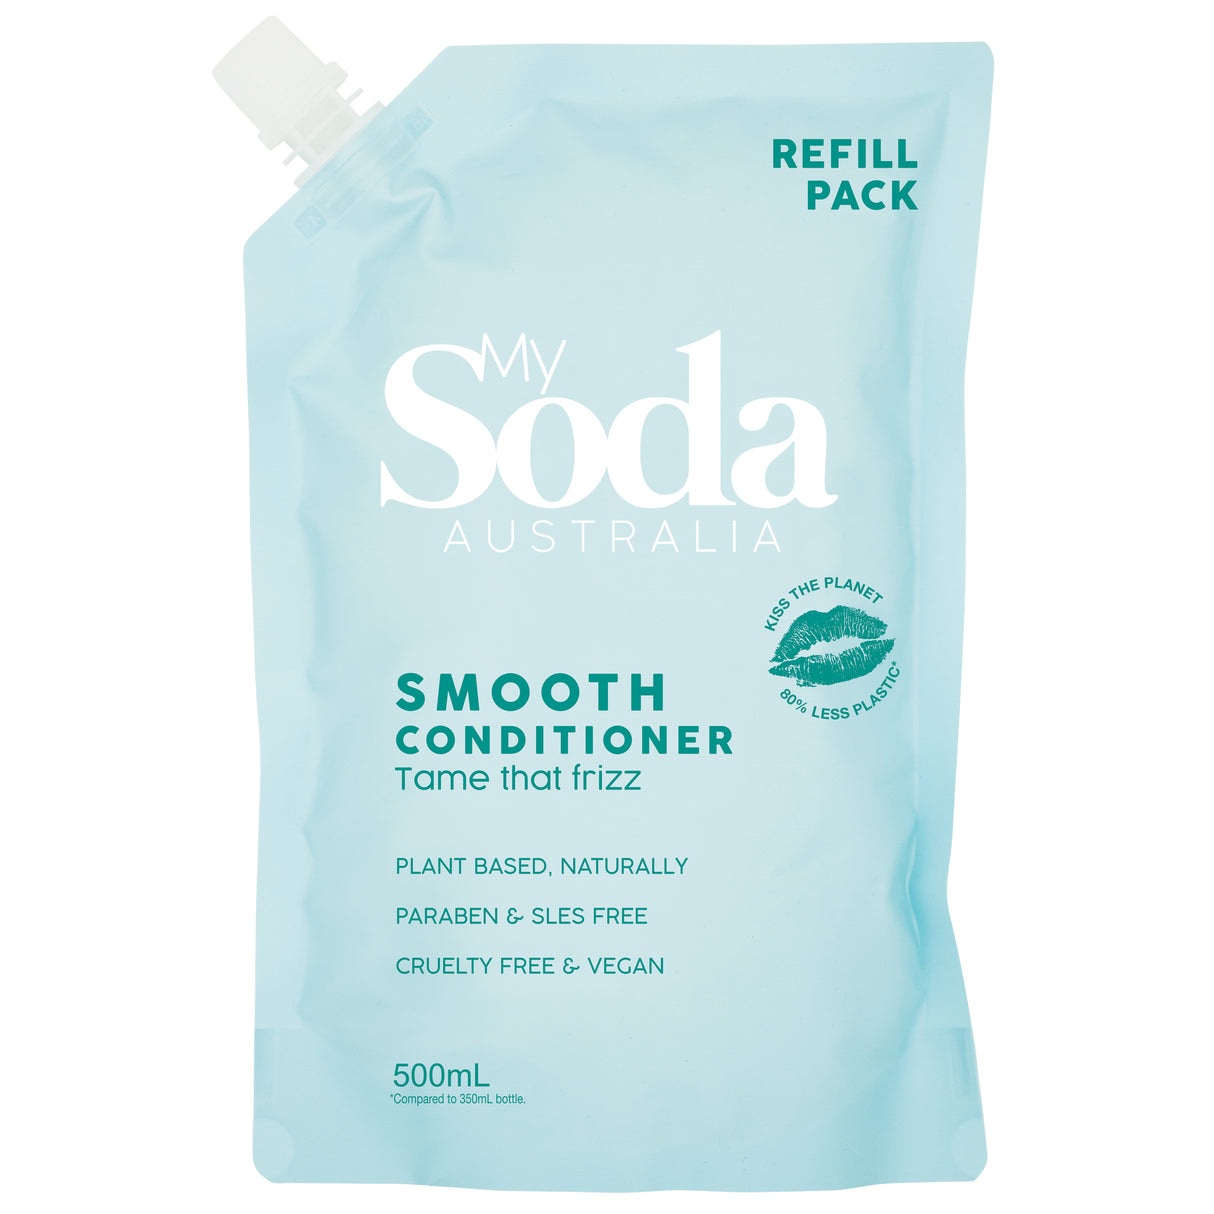 My Soda Smooth Conditioner Refill 500ml